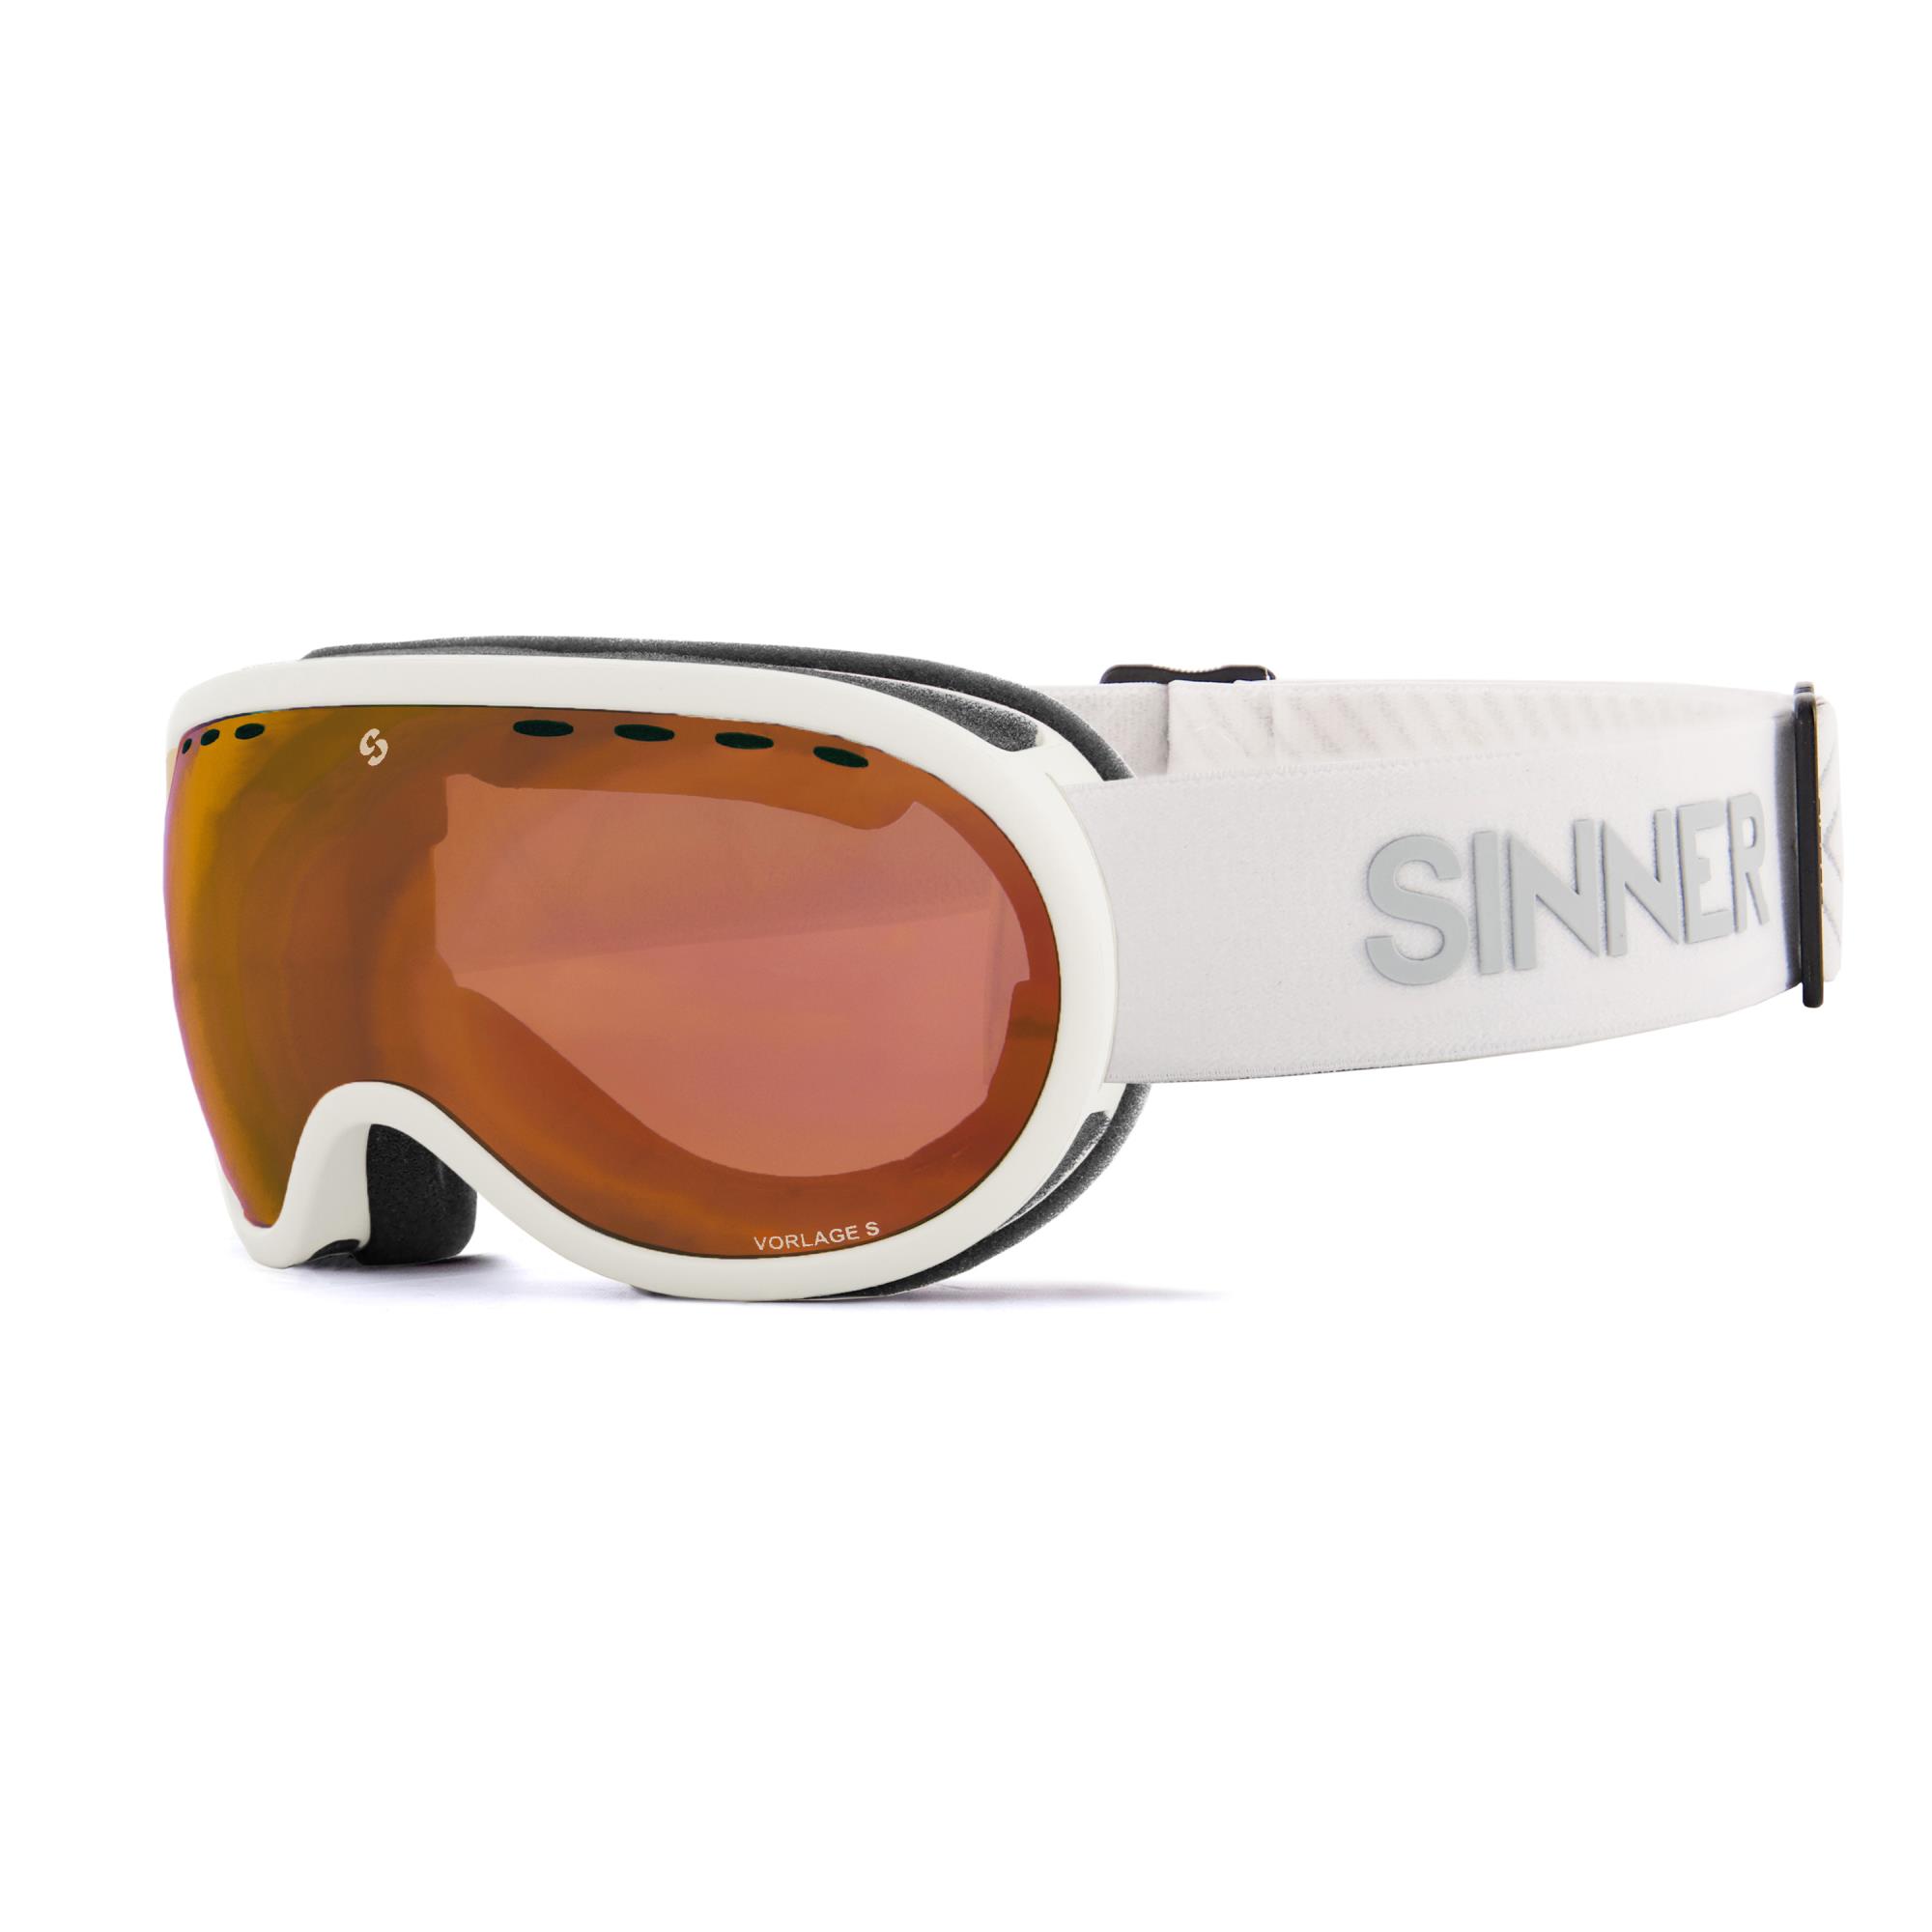 Sinner Vorlage S Sintec Skibril - Wit | Categorie 2